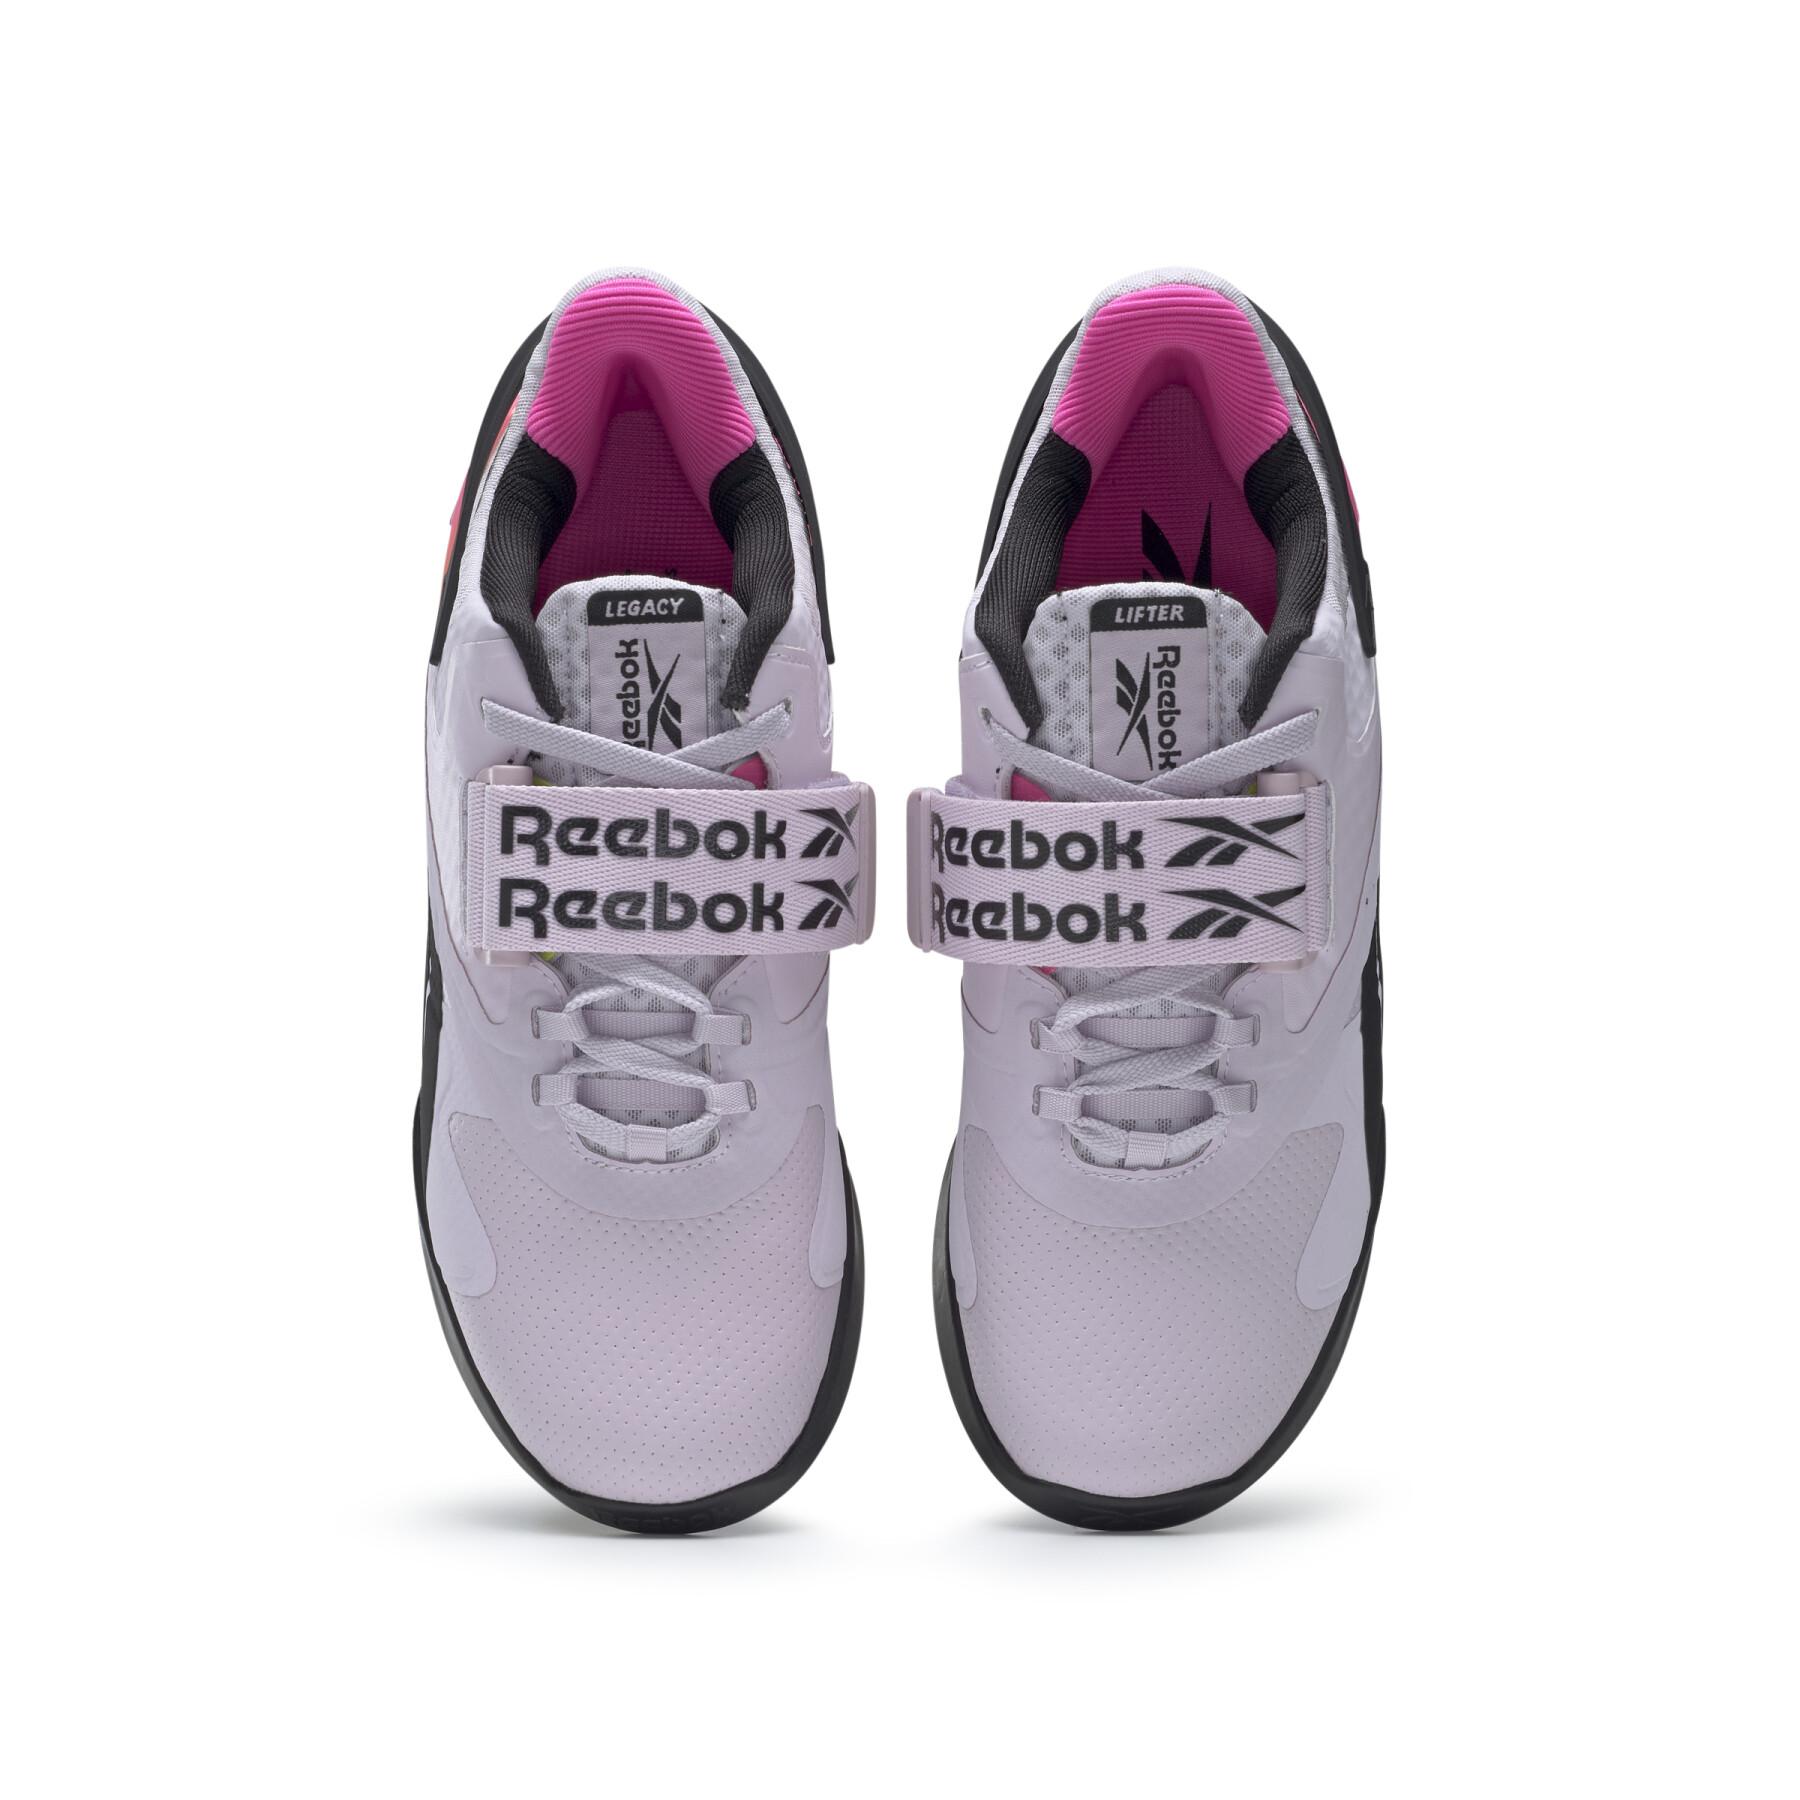 Chaussures femme Reebok Legacy Lifter II